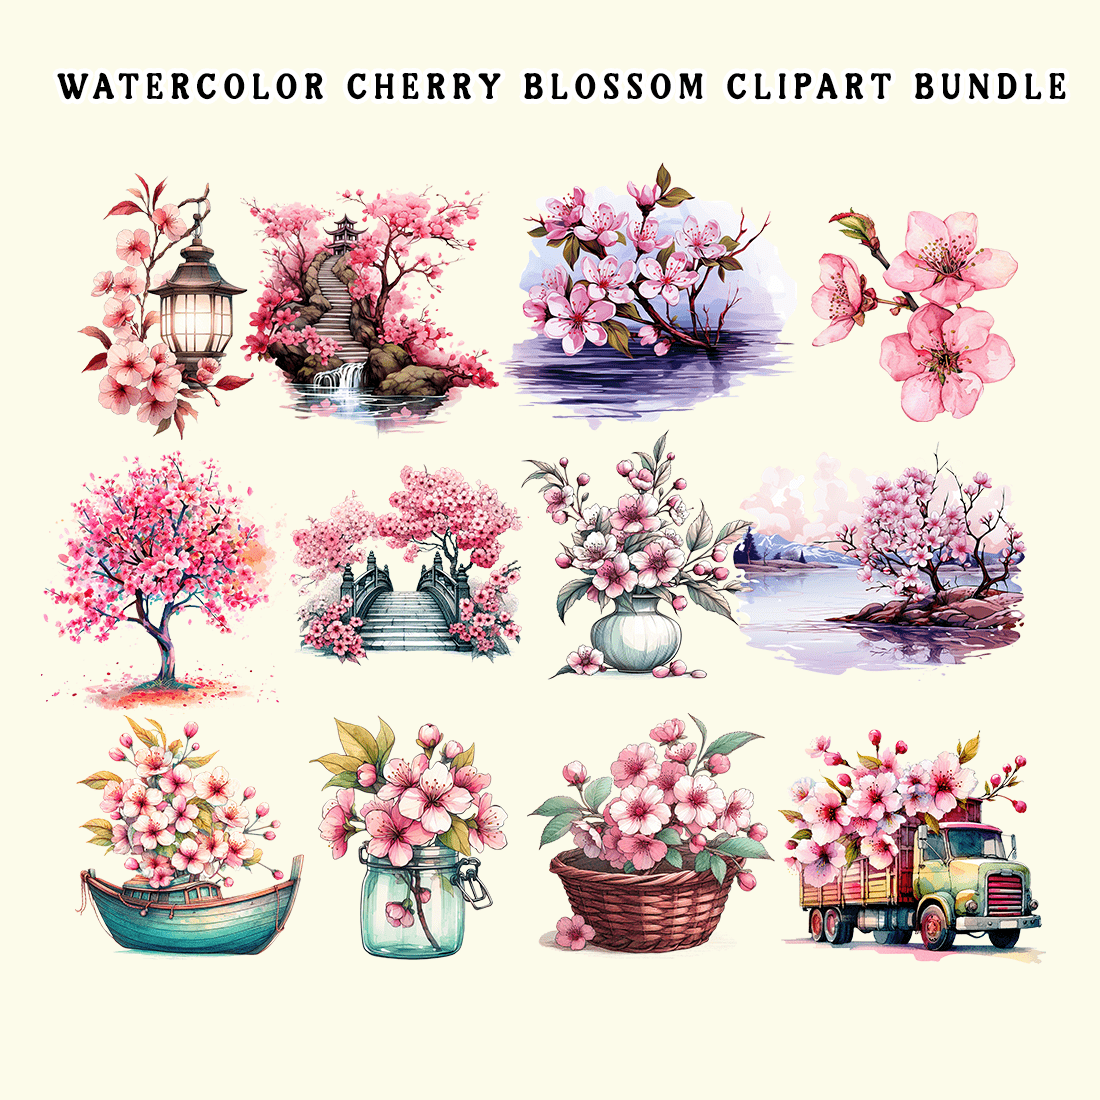 Watercolor Cherry Blossom Clipart Bundle preview image.